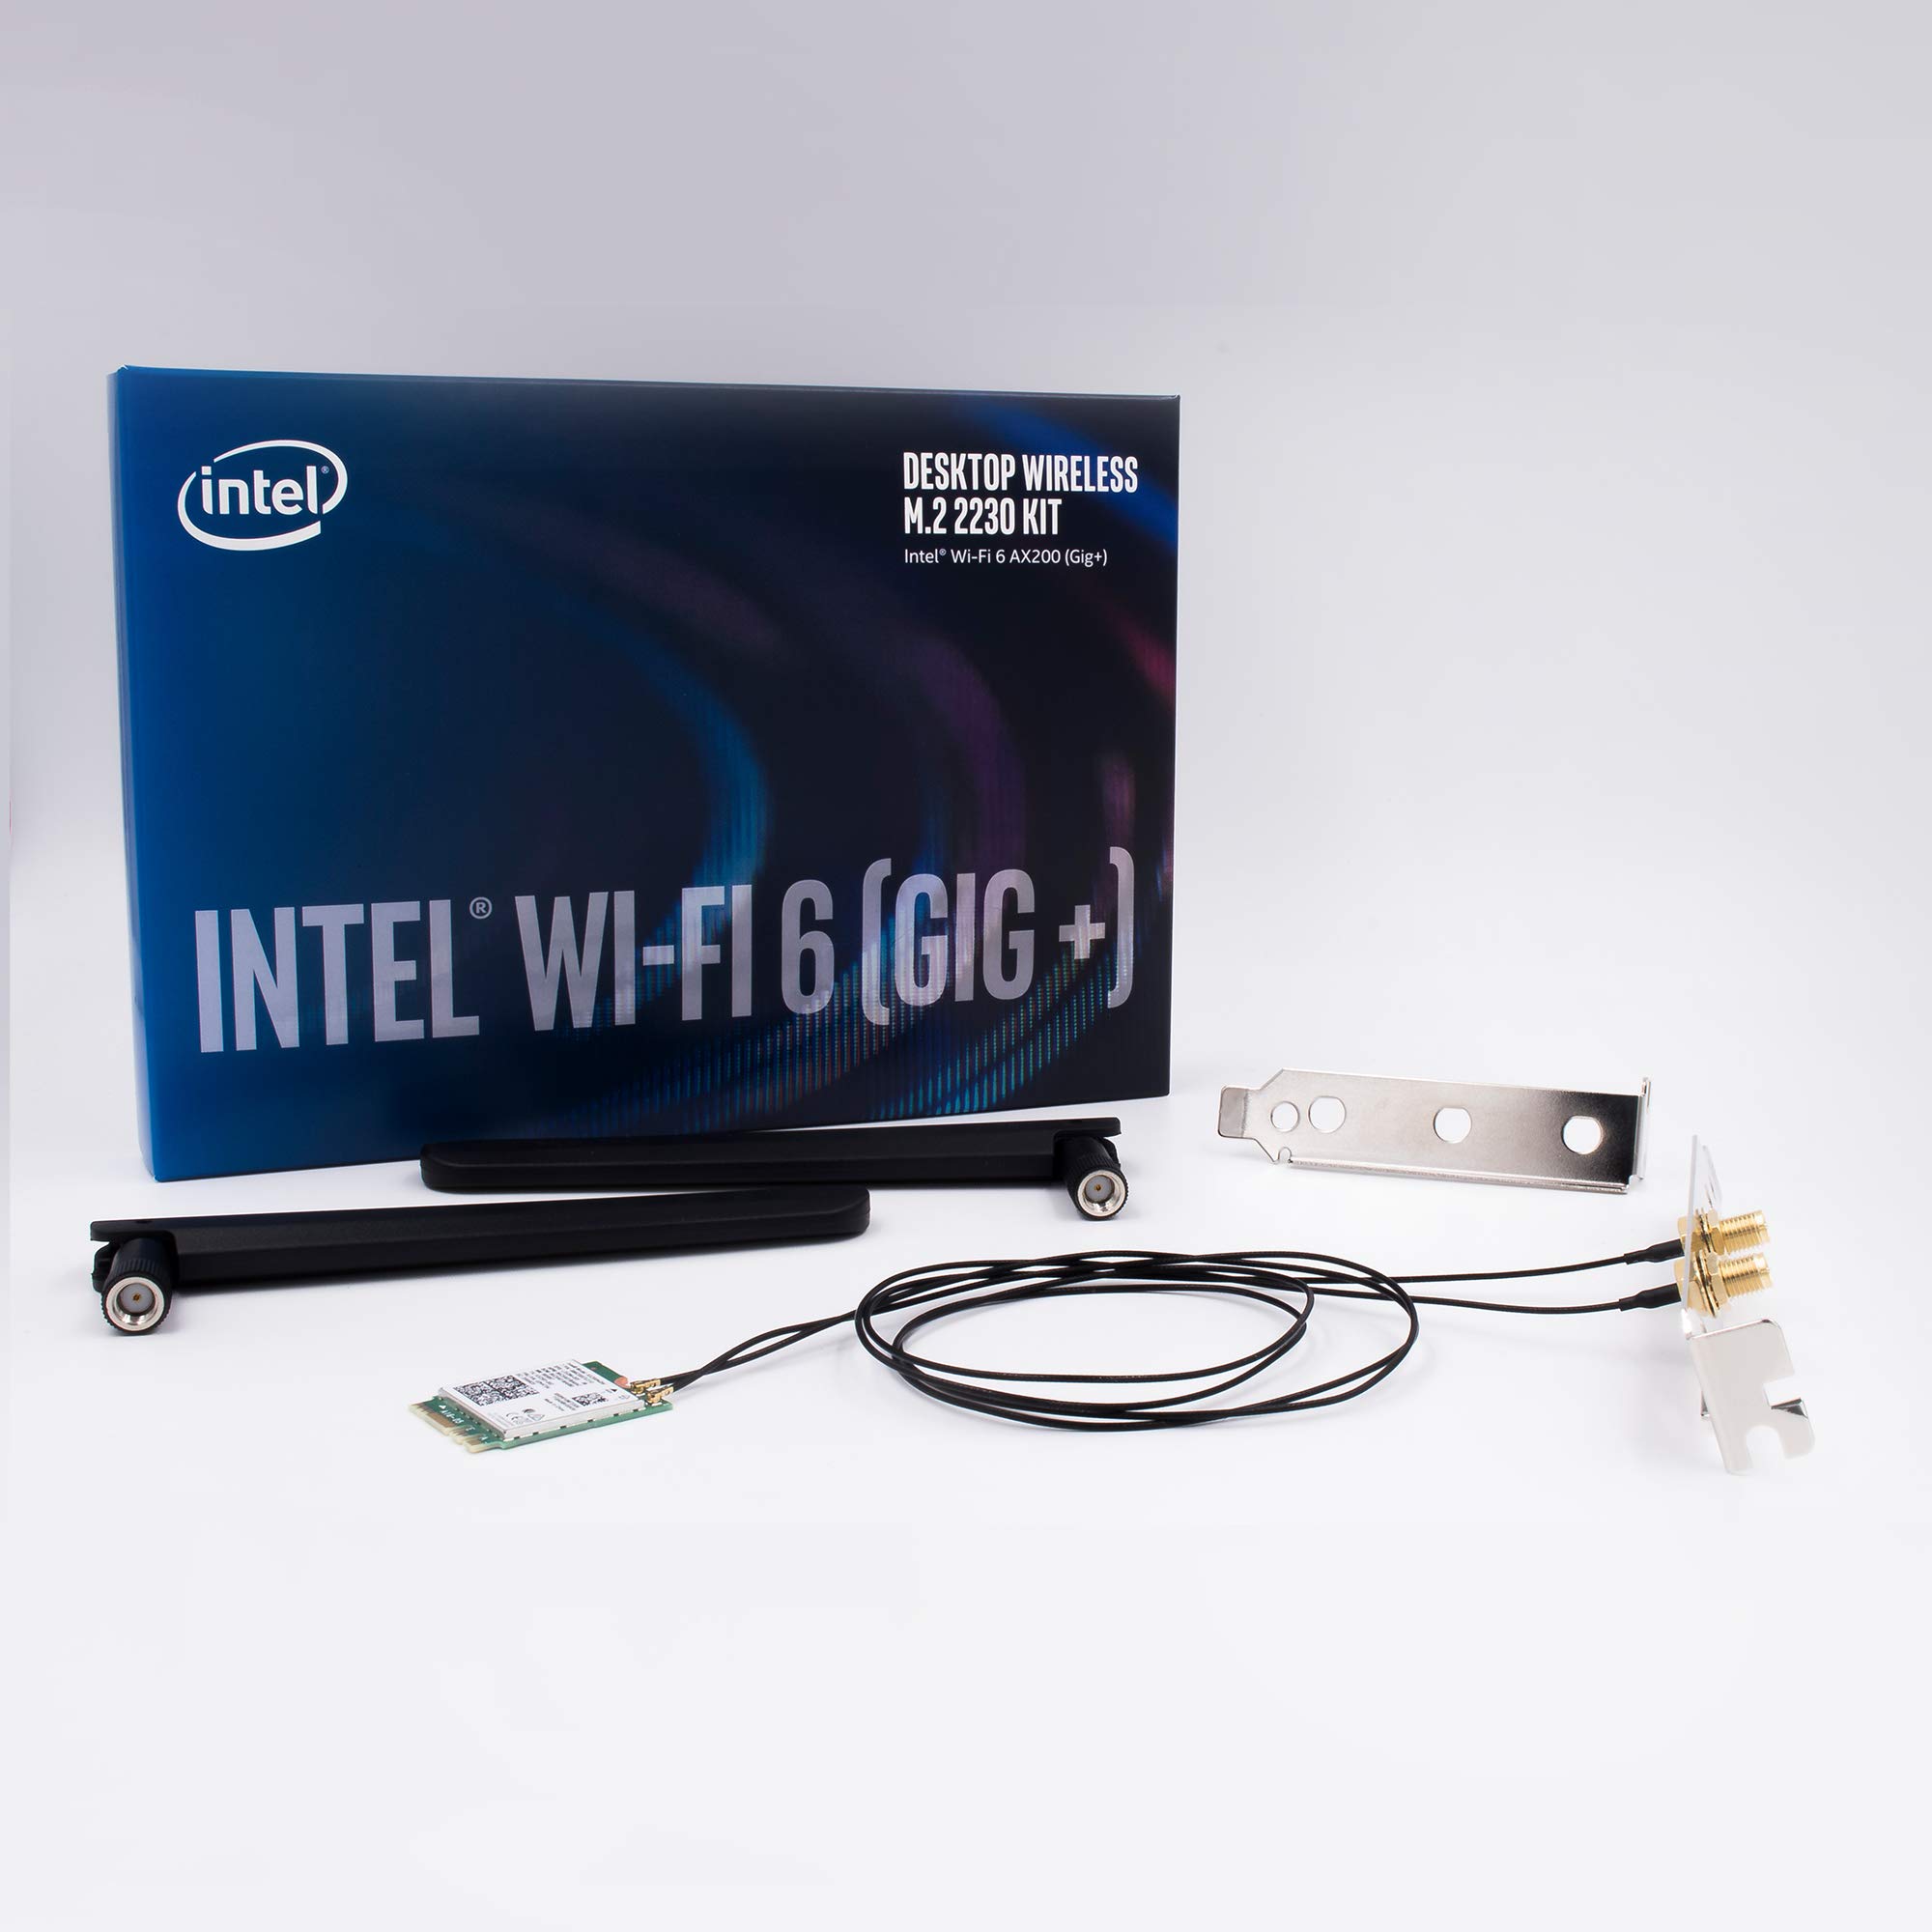 Intel Wi-Fi 6 AX200 (Gig+) & Bluetooth 5.0 M.2 2230 Module Desktop Kit w/ Antennas, Cables, & Brackets $10.95 + Free Shipping w/ Prime or on $35+